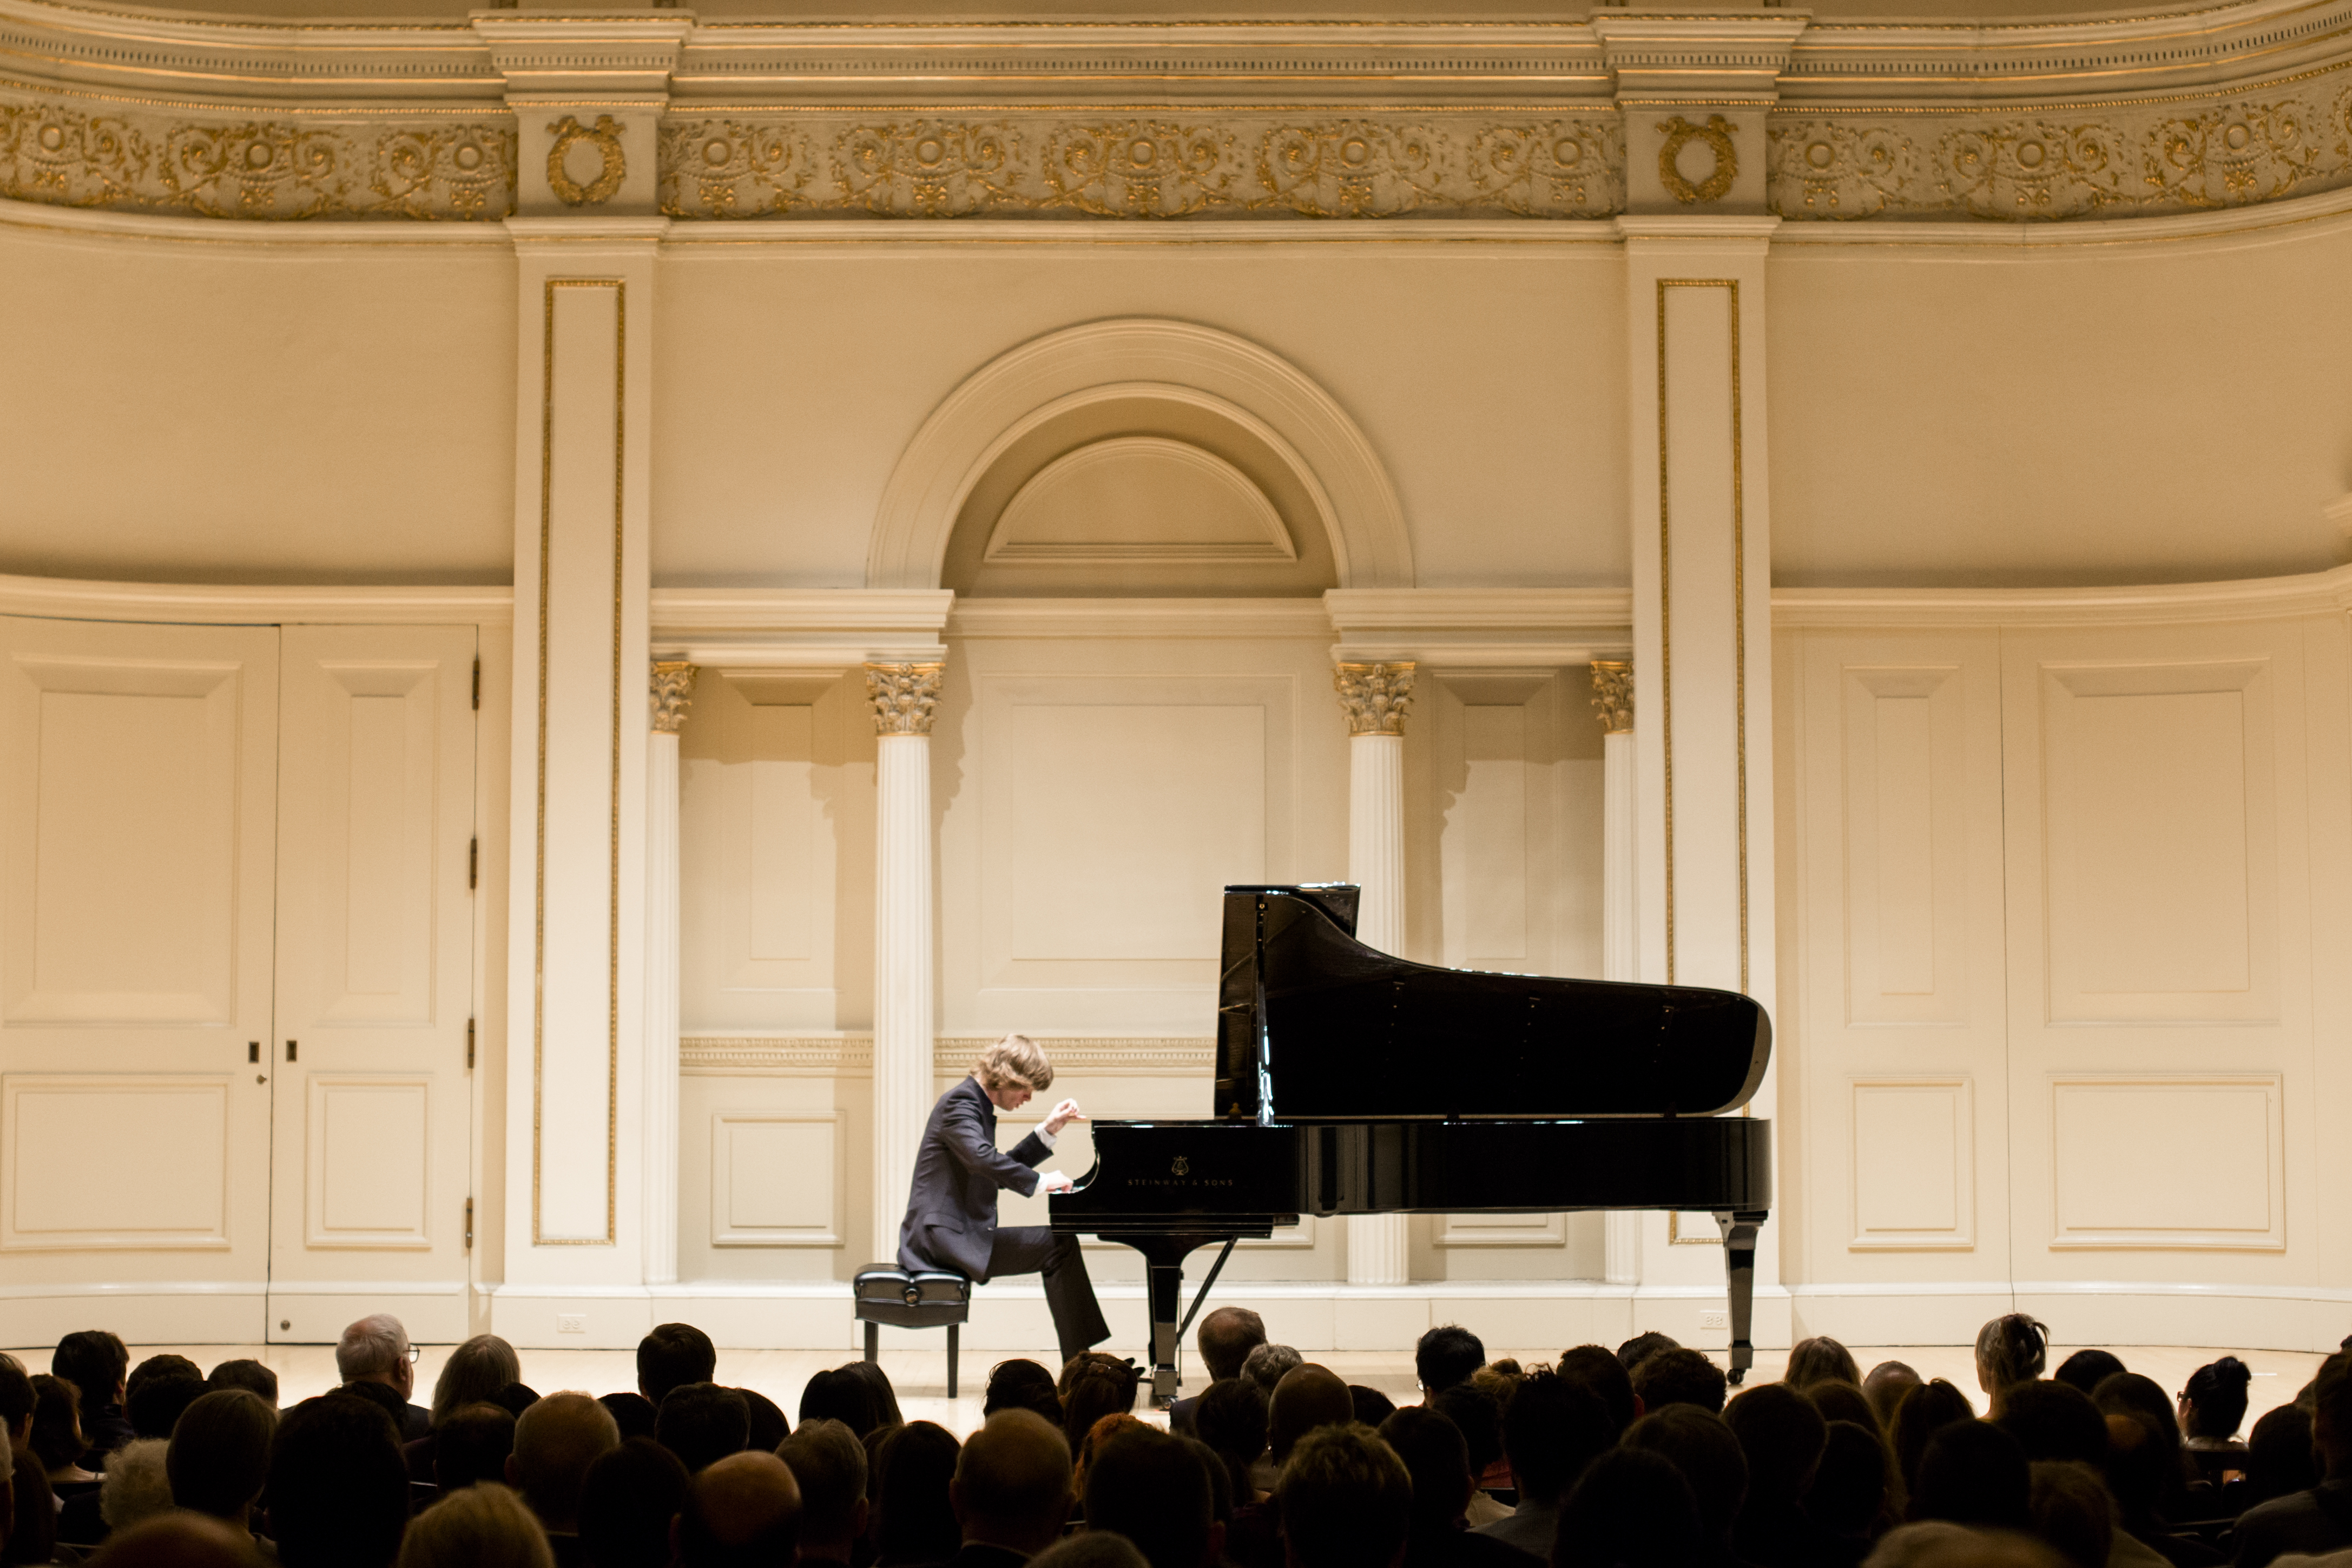 Pianist Arsentiy Kharitonov performs at Carnegie Hall in Manhattan, New York, on May 20, 2016. (Samira Bouaou/Epoch Times)